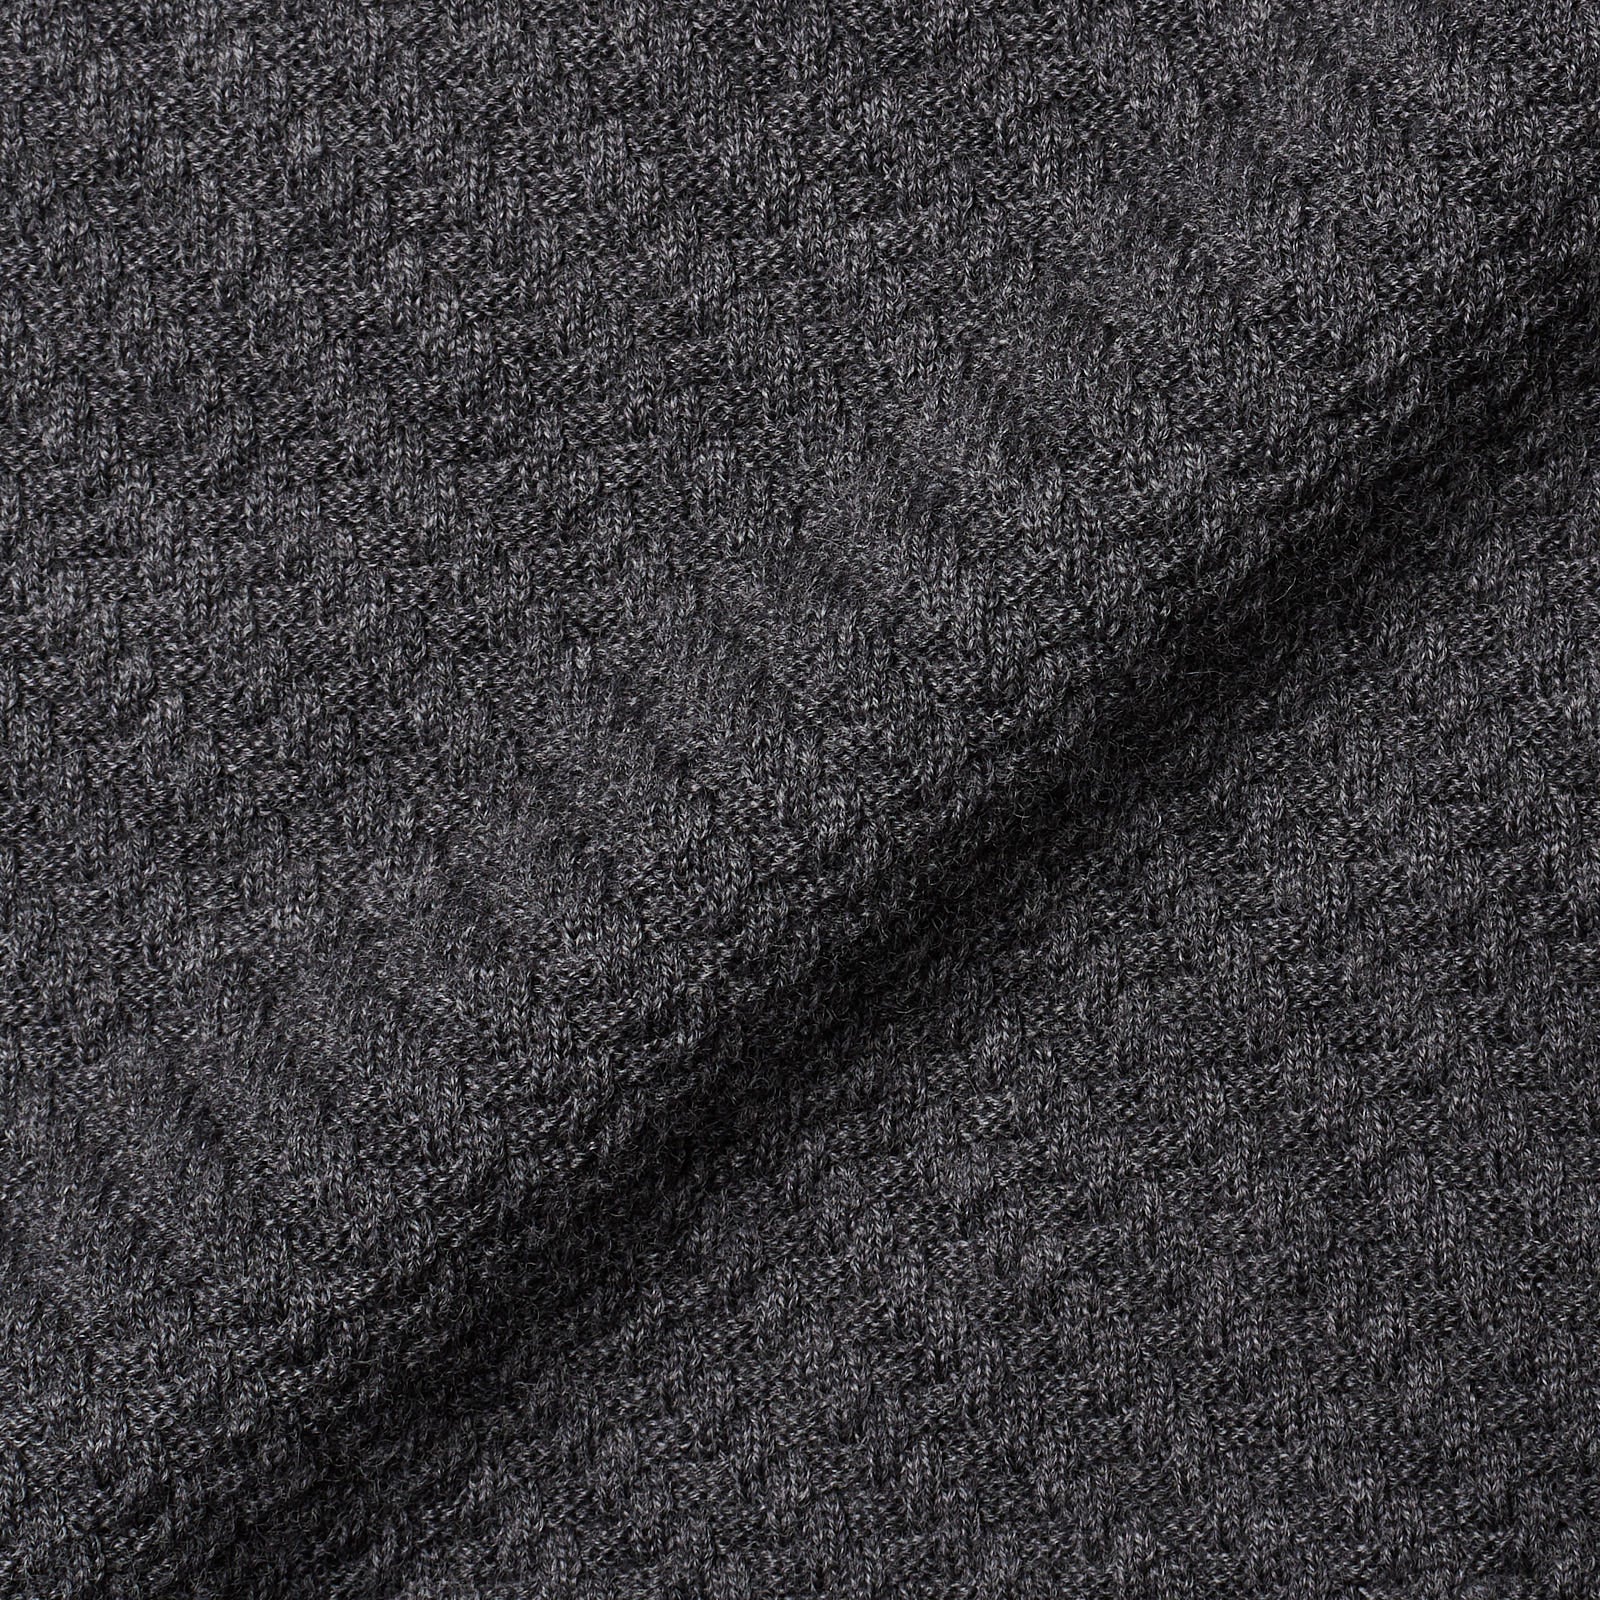 BERLUTI Paris Gray Wool Knit Cardigan Sweater with Calfskin Details R50 NEW US M